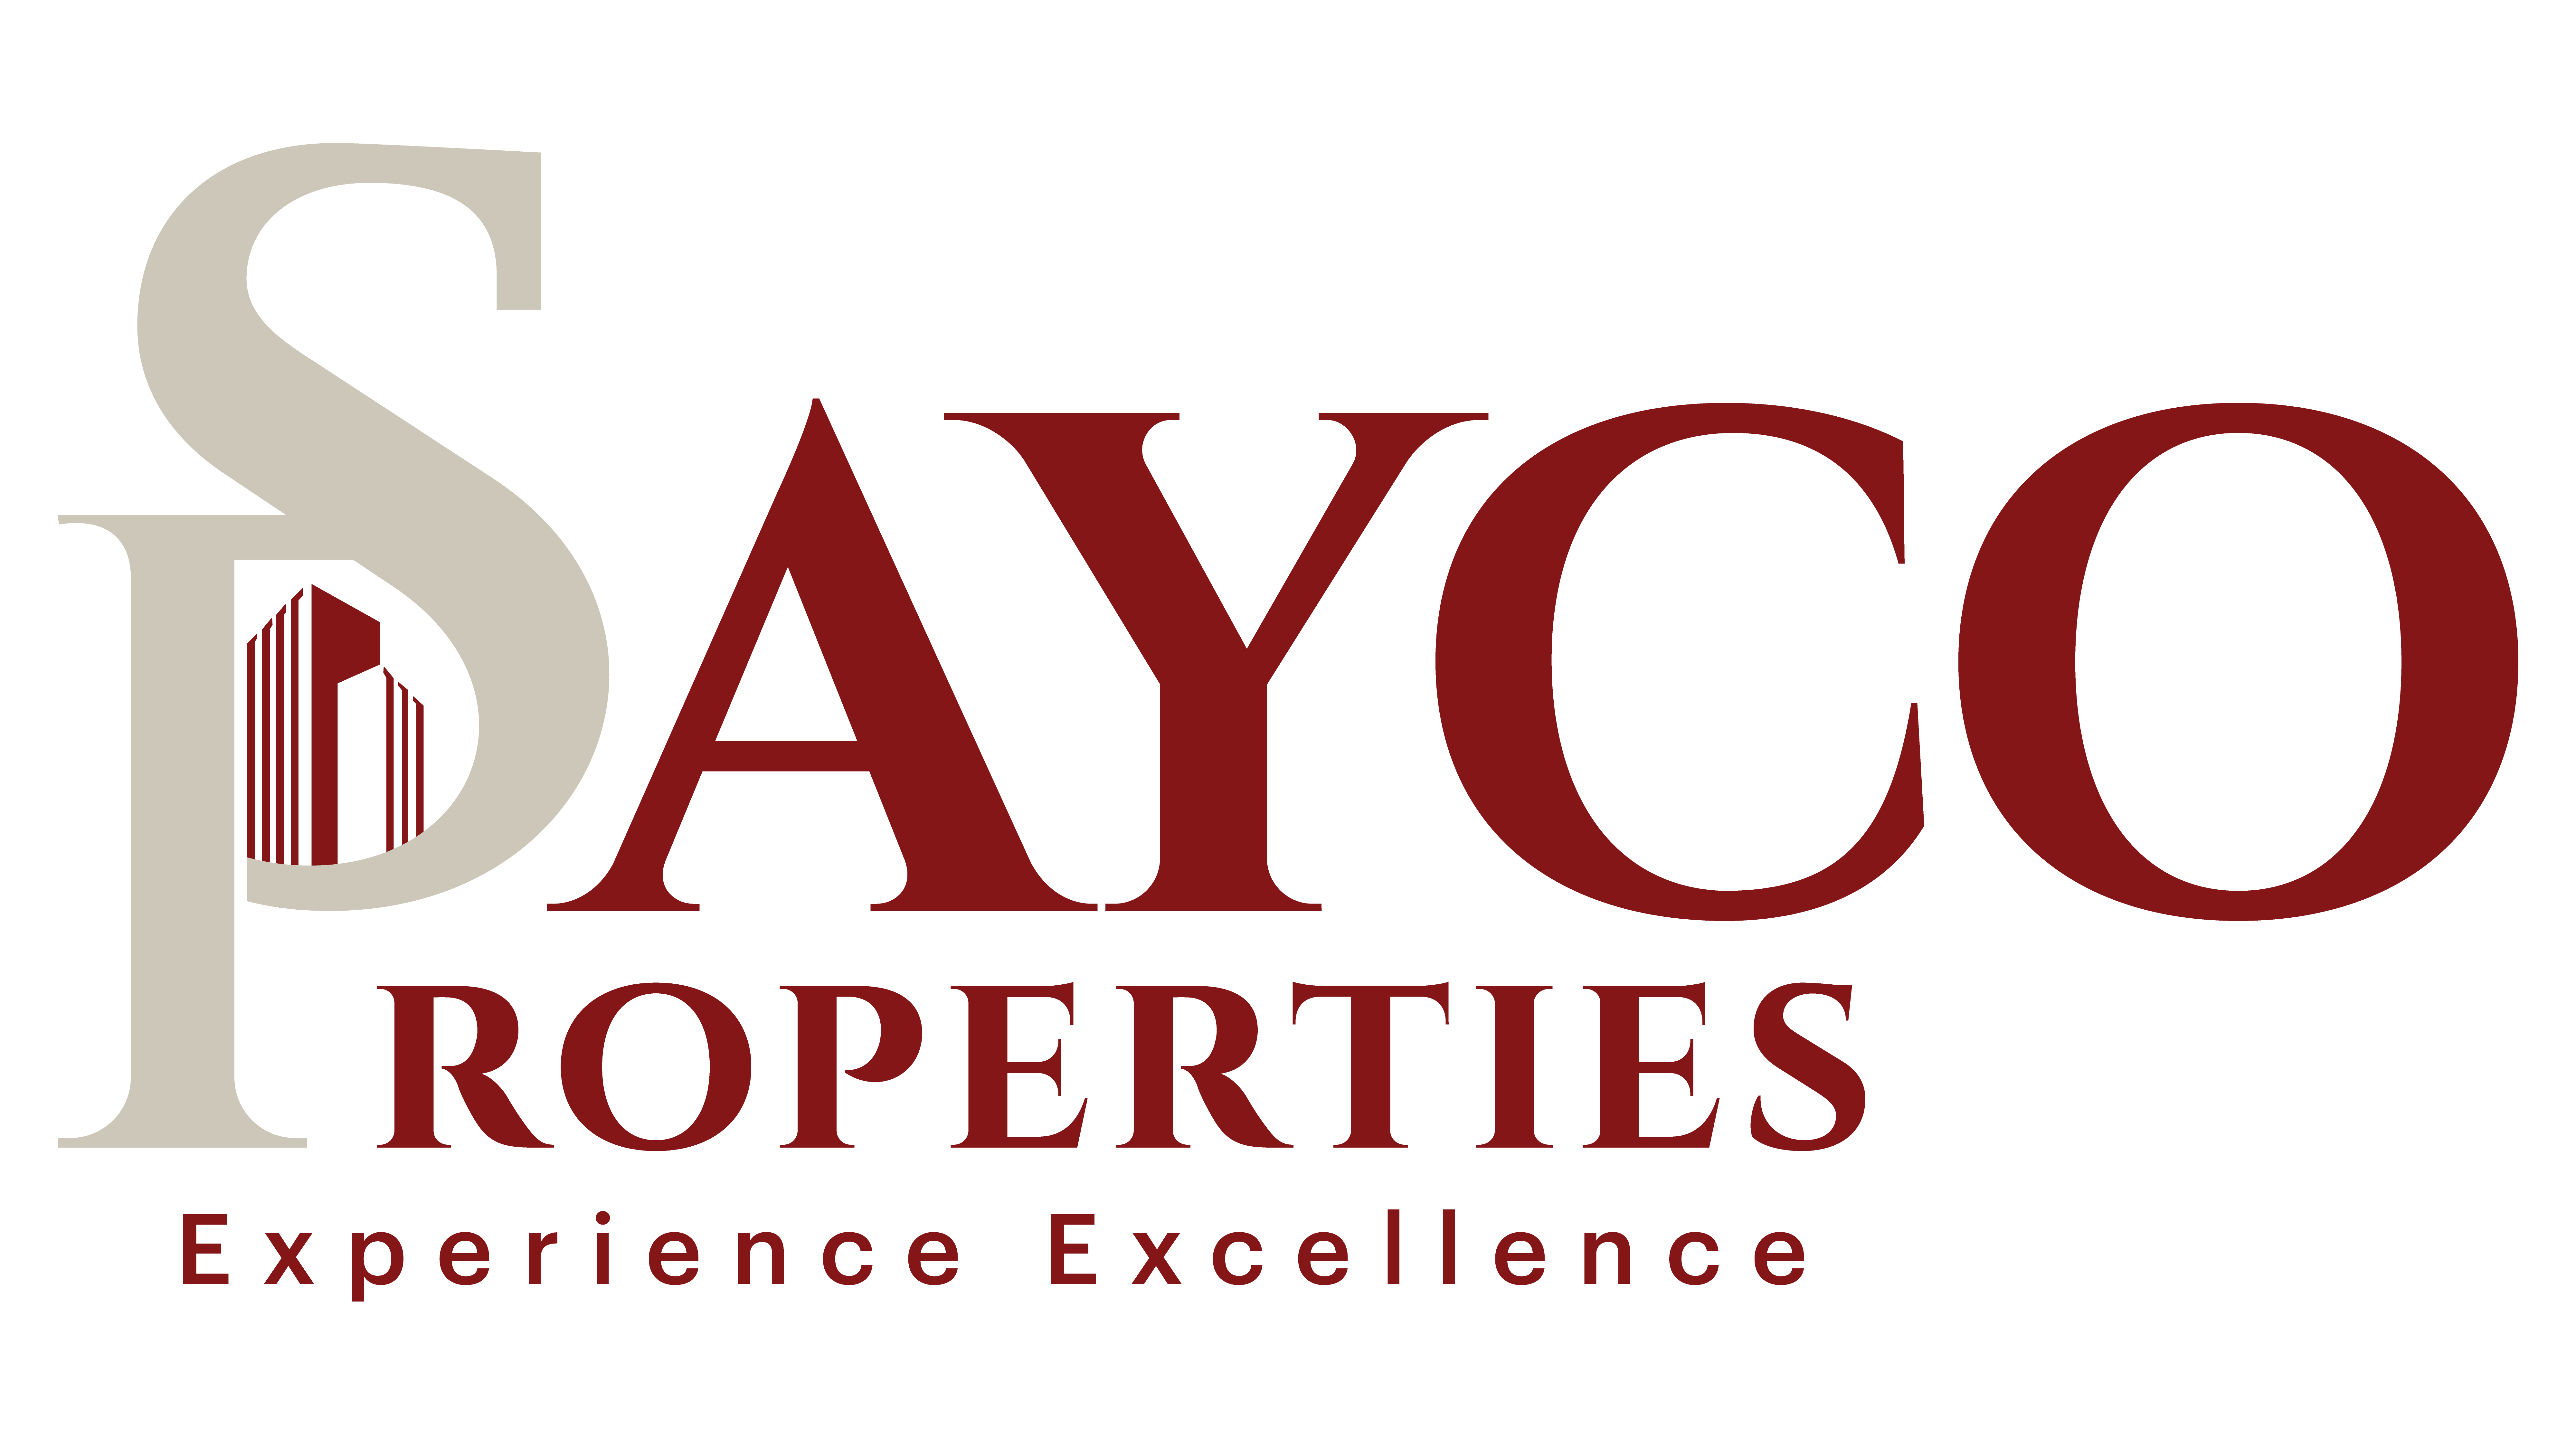 Sayco Properties